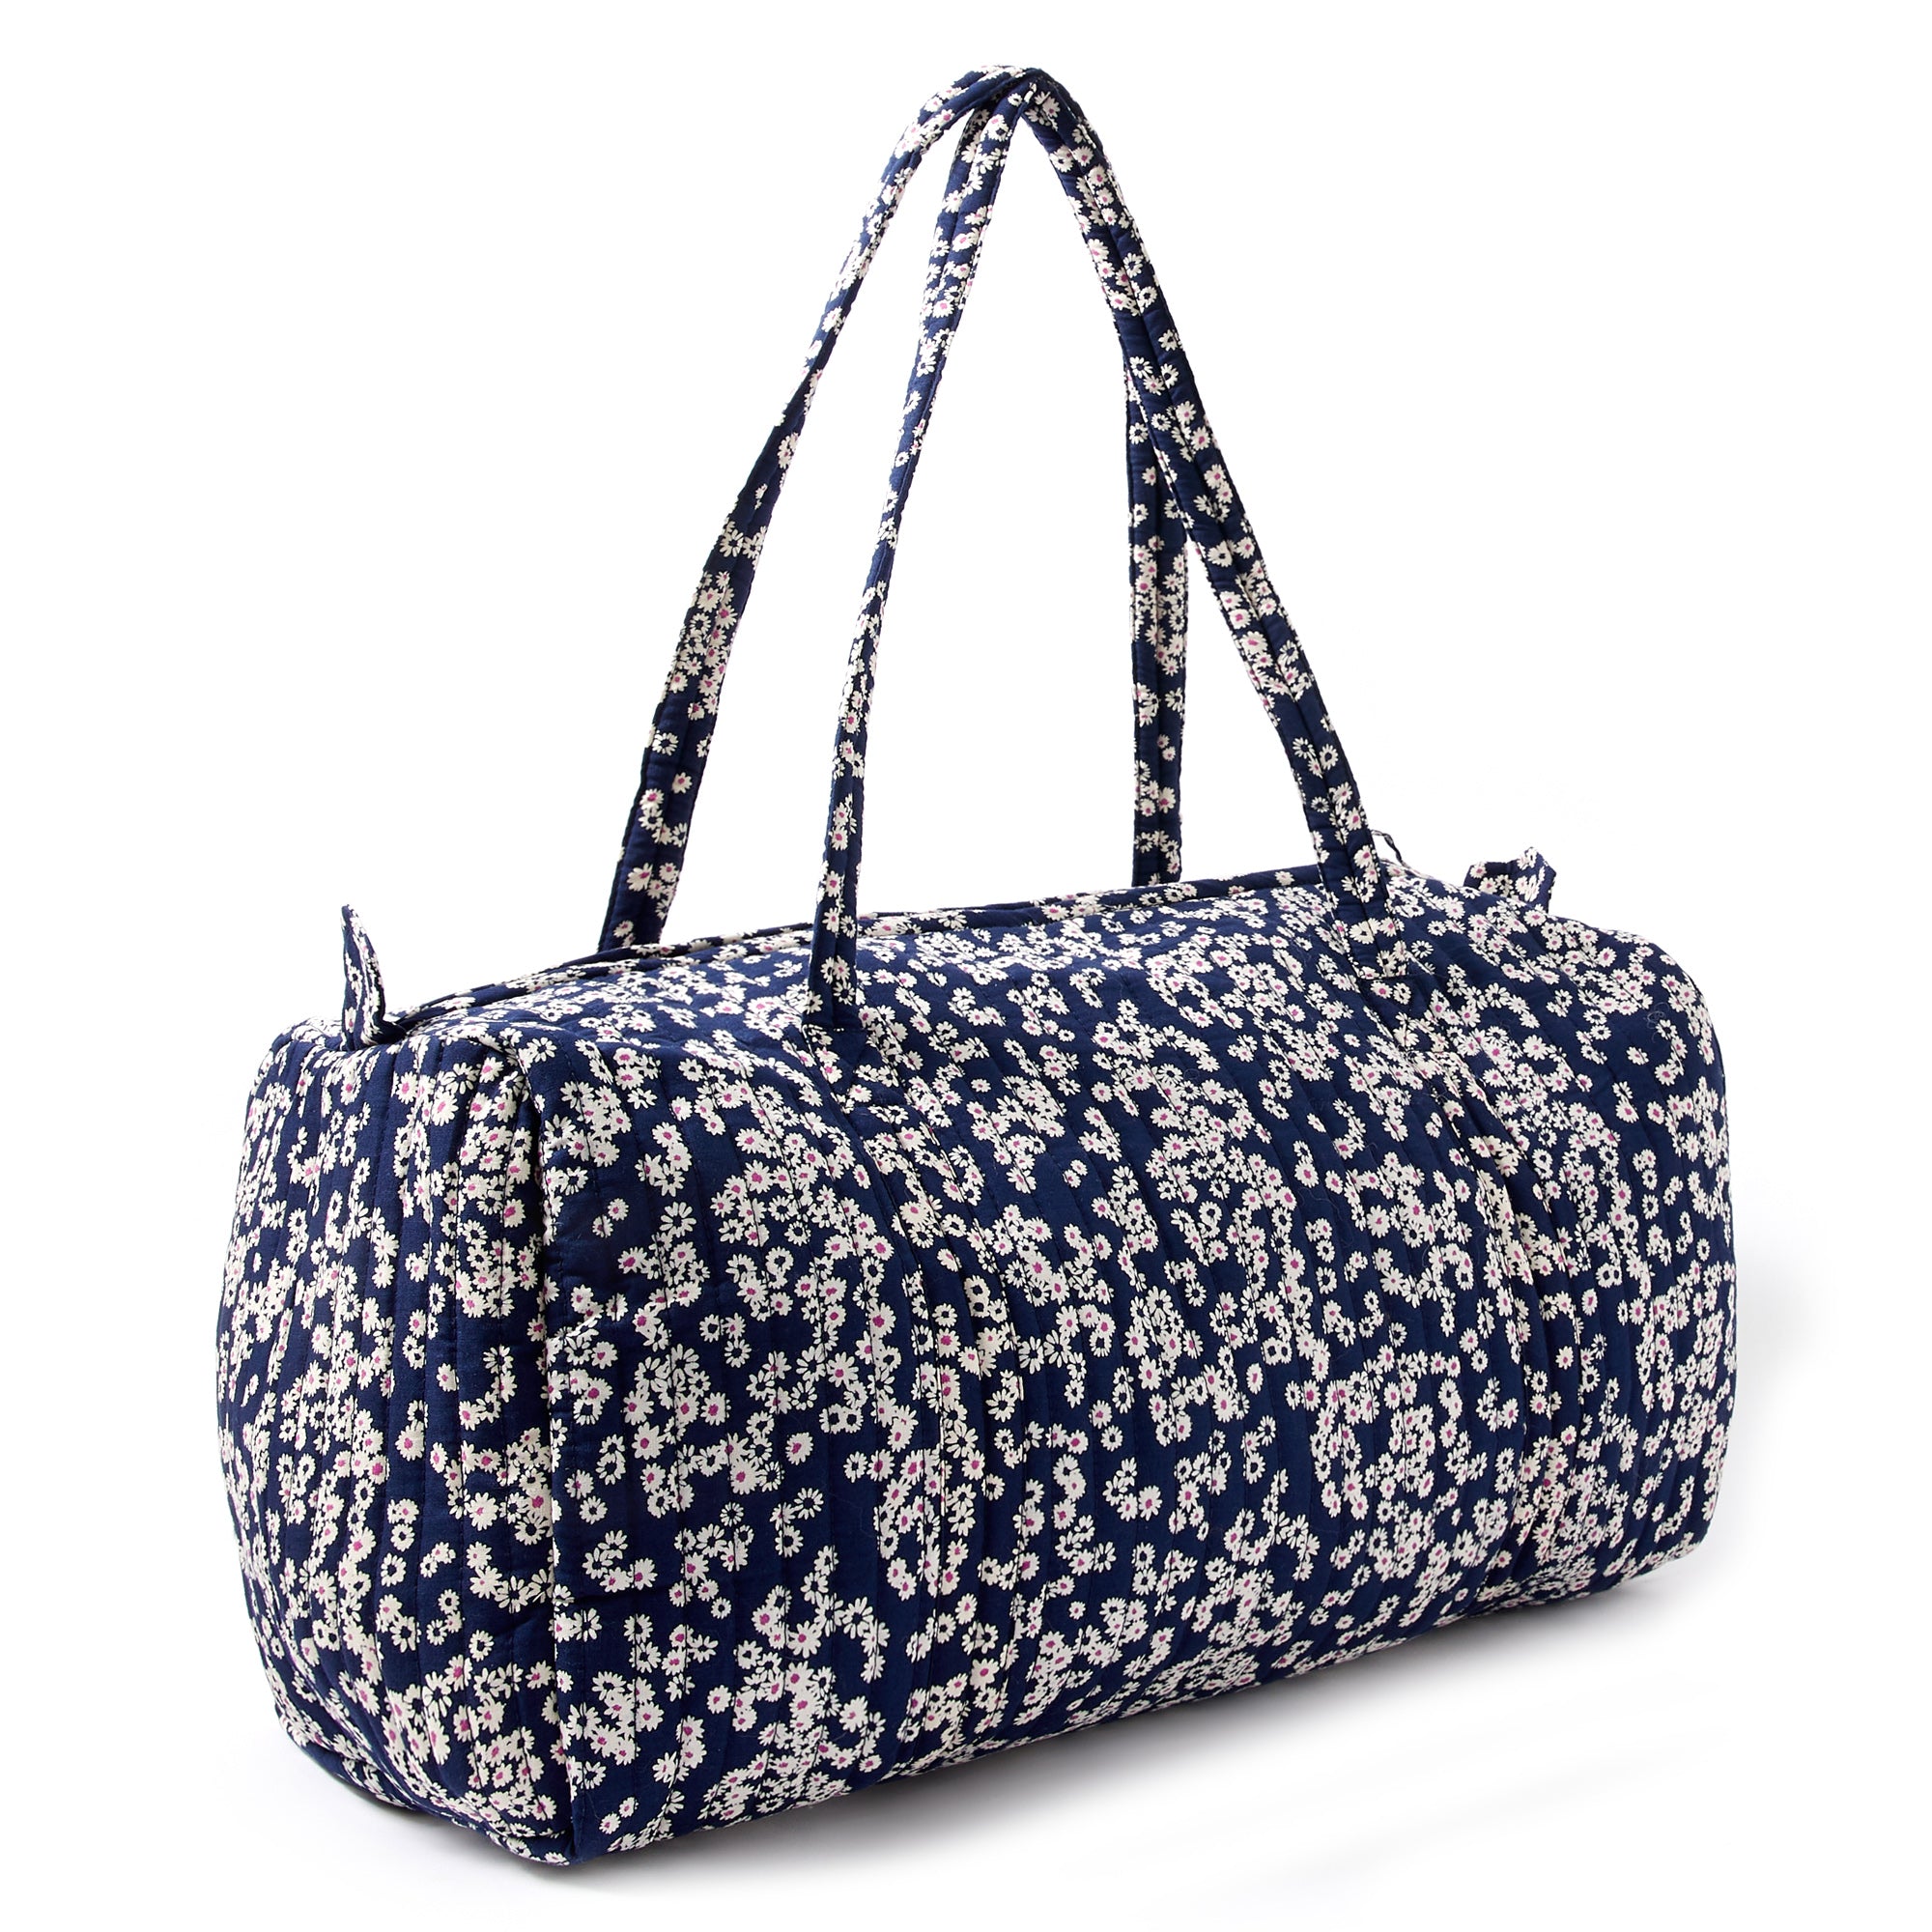 Accessorize London women's Blue Fabric Ditsy Daisy Weekender Travel bag